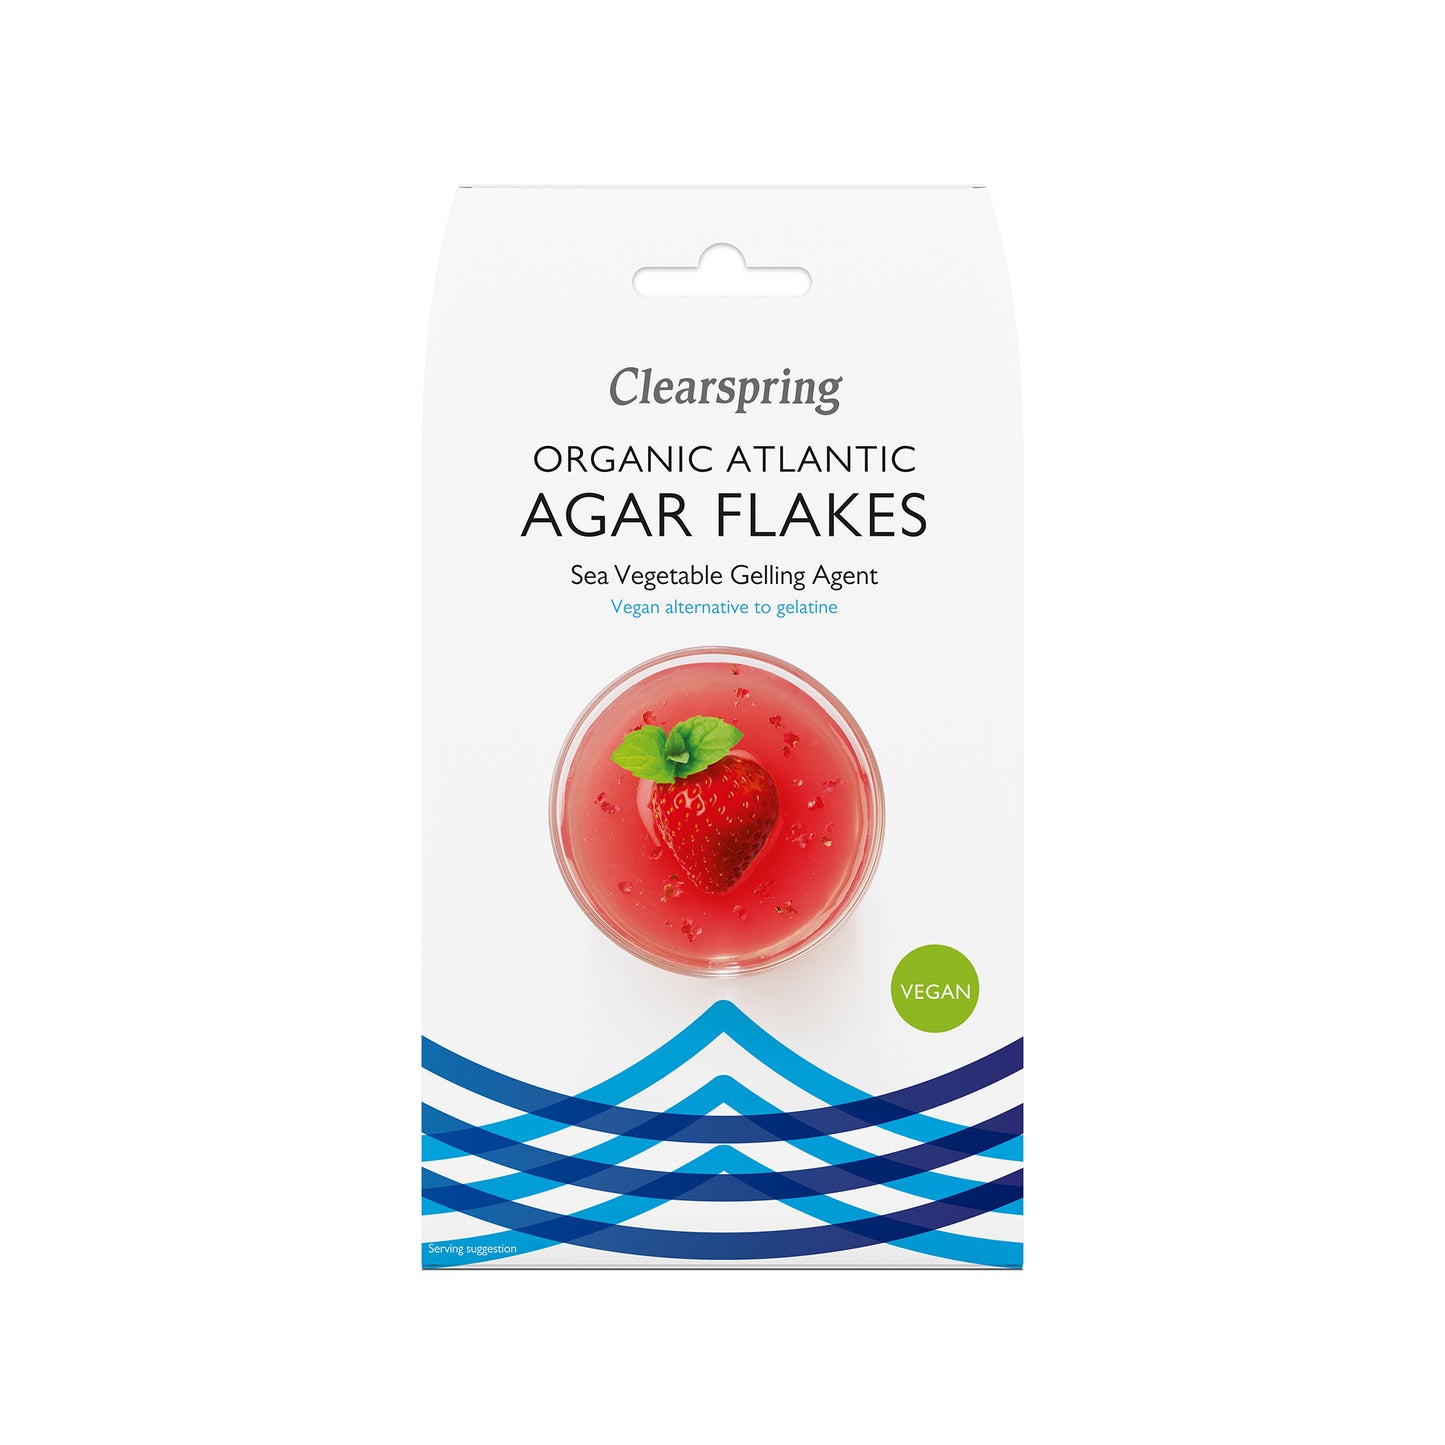 Organic Atlantic Agar Flakes - Sea Vegetable Gelling Agent